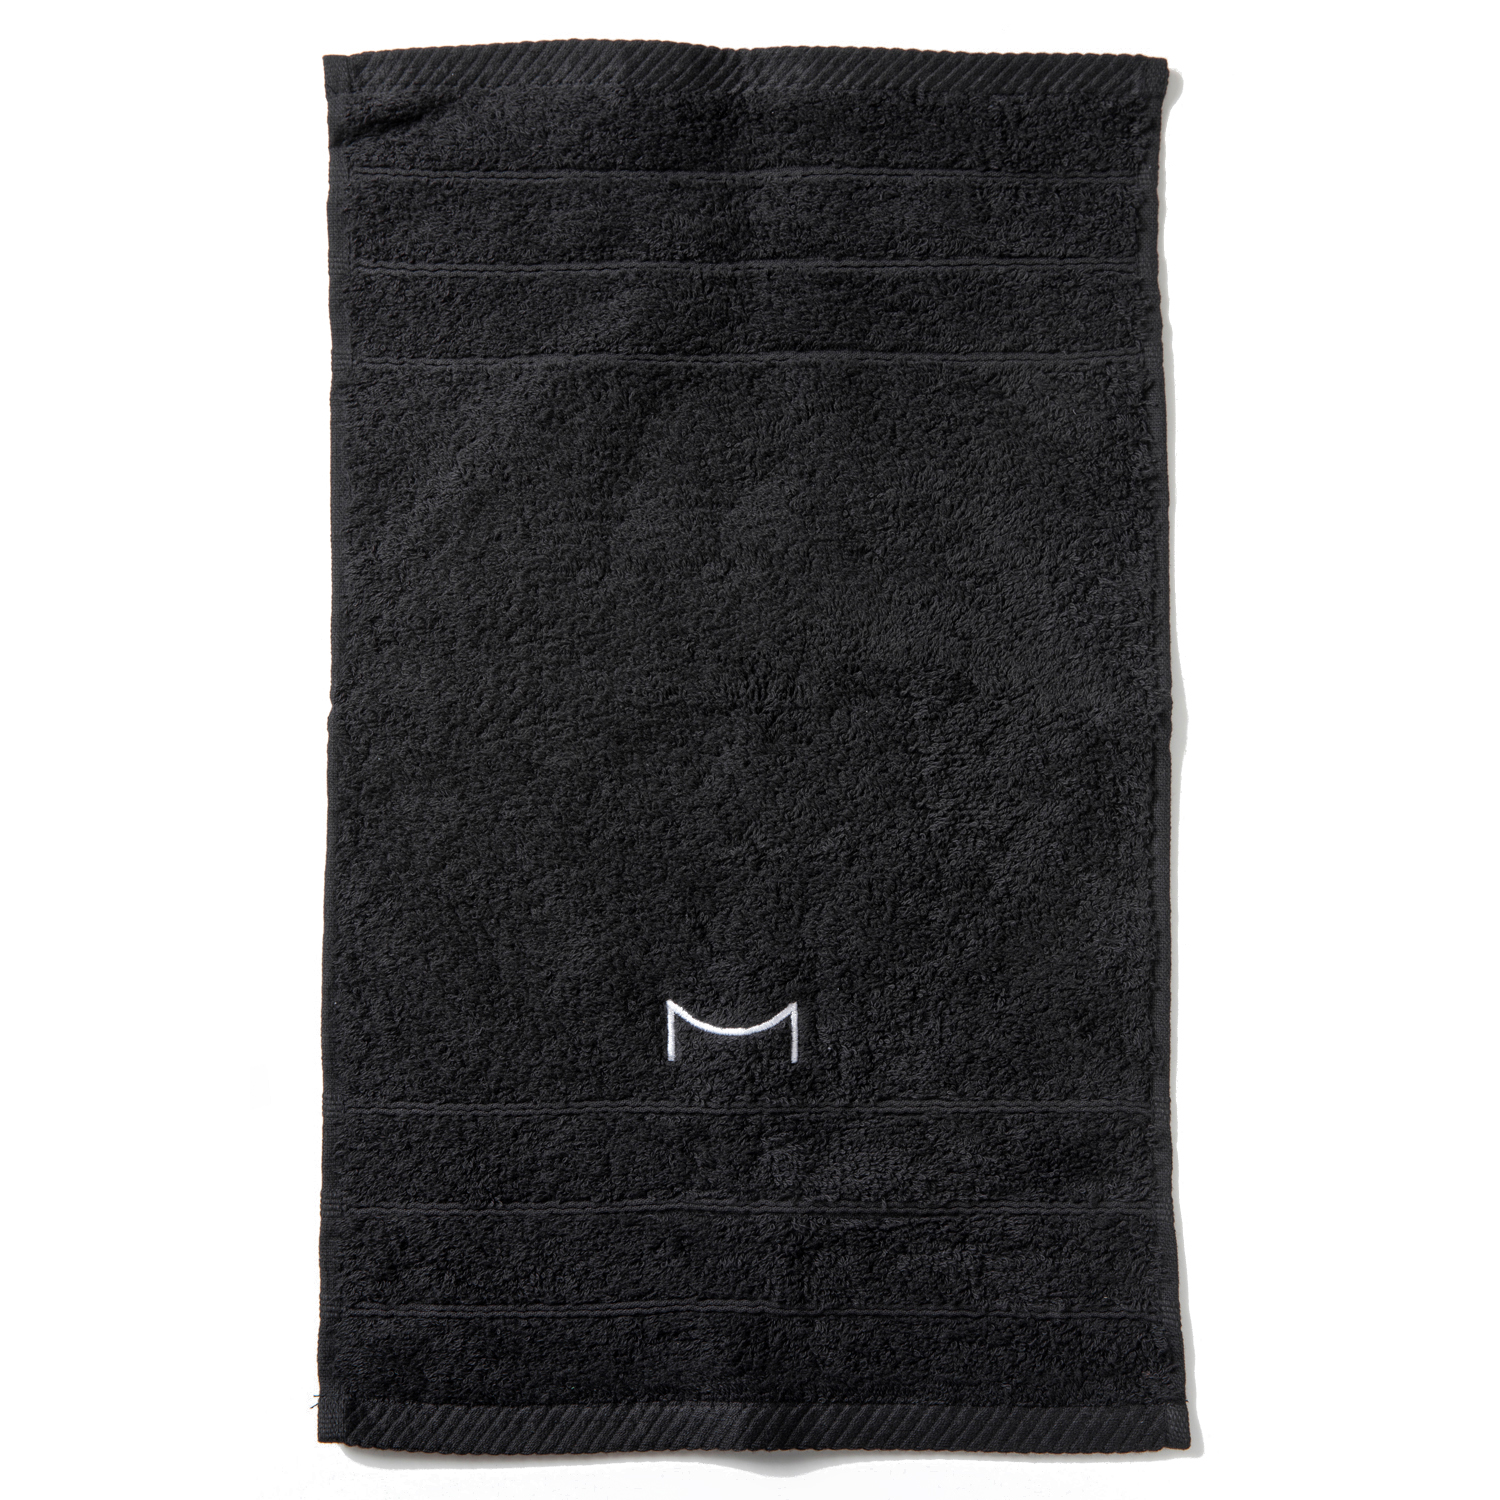 Makeup towel - The Modernist Shop